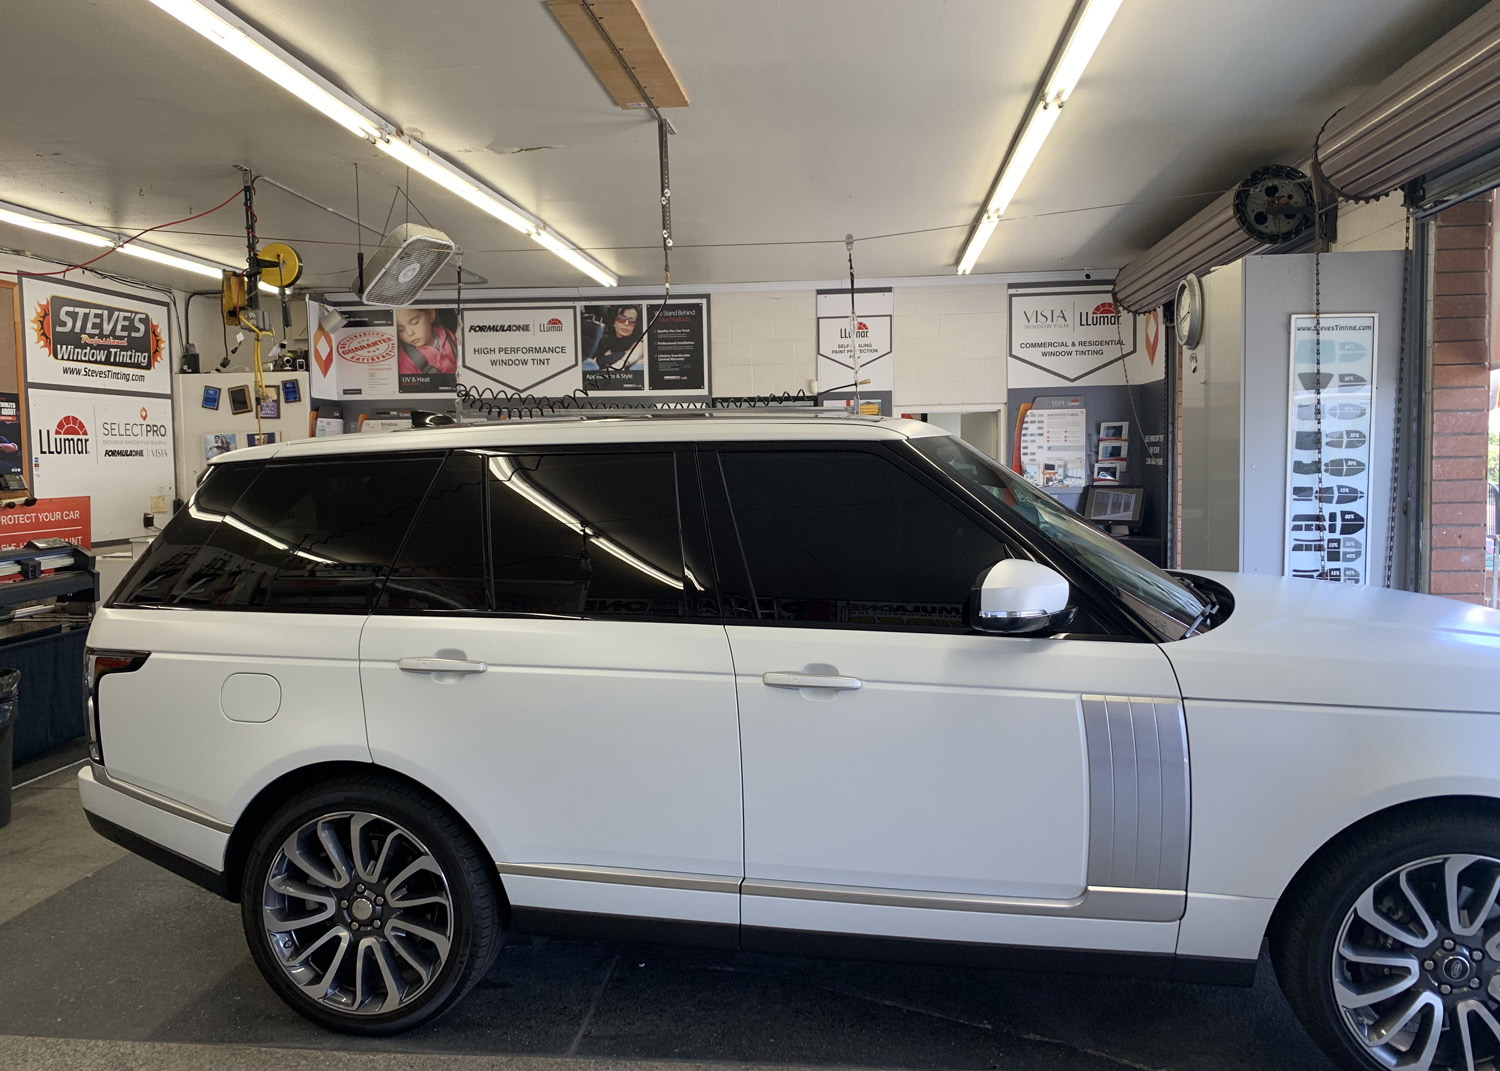 Range Rover with 5% Window Tint